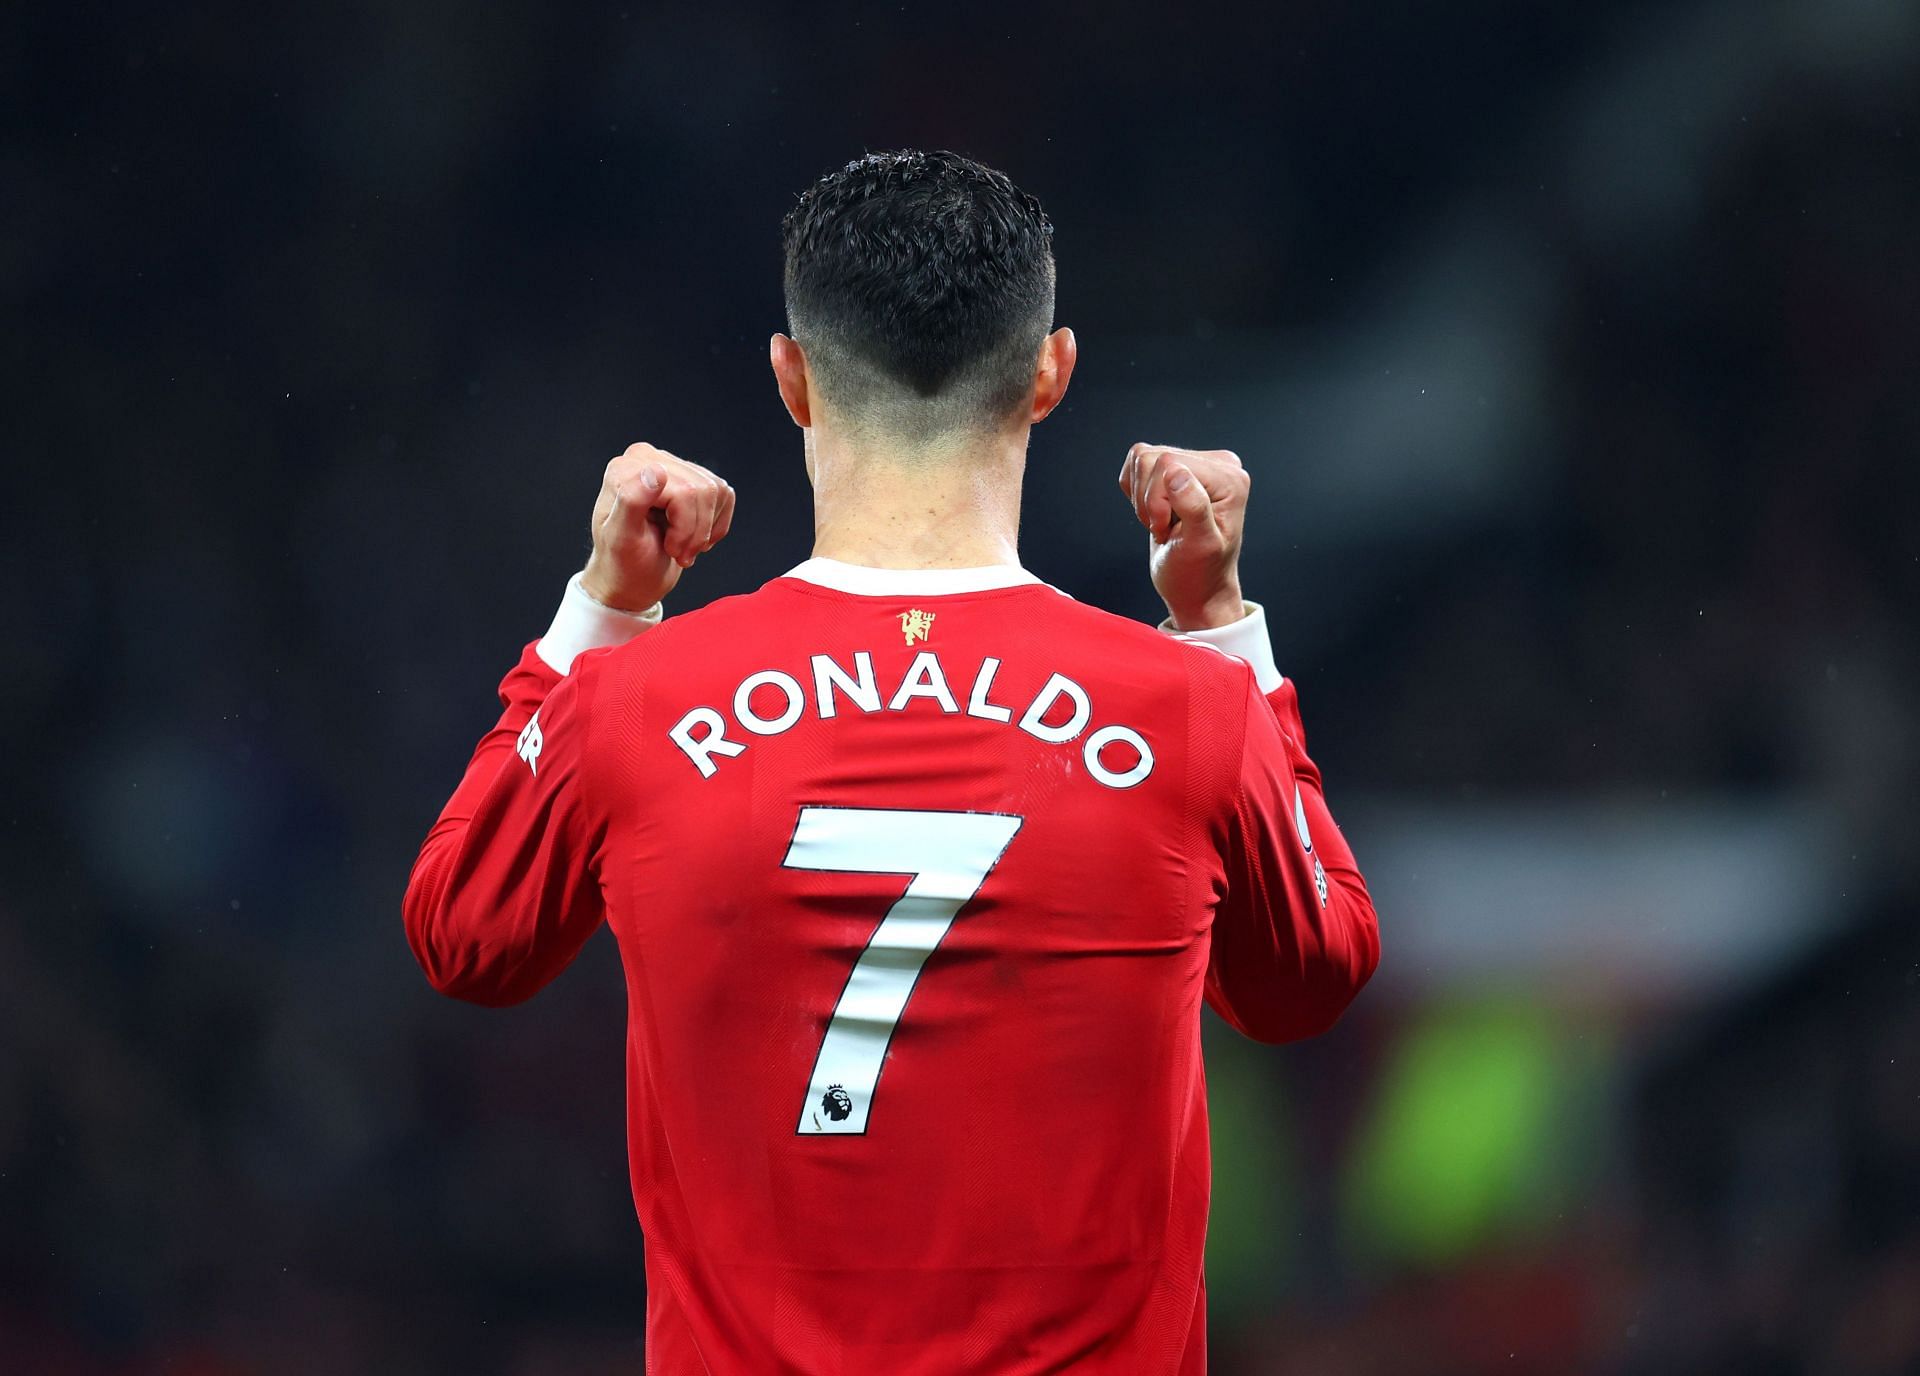 Cristiano Ronaldo looks set to lead United's new era